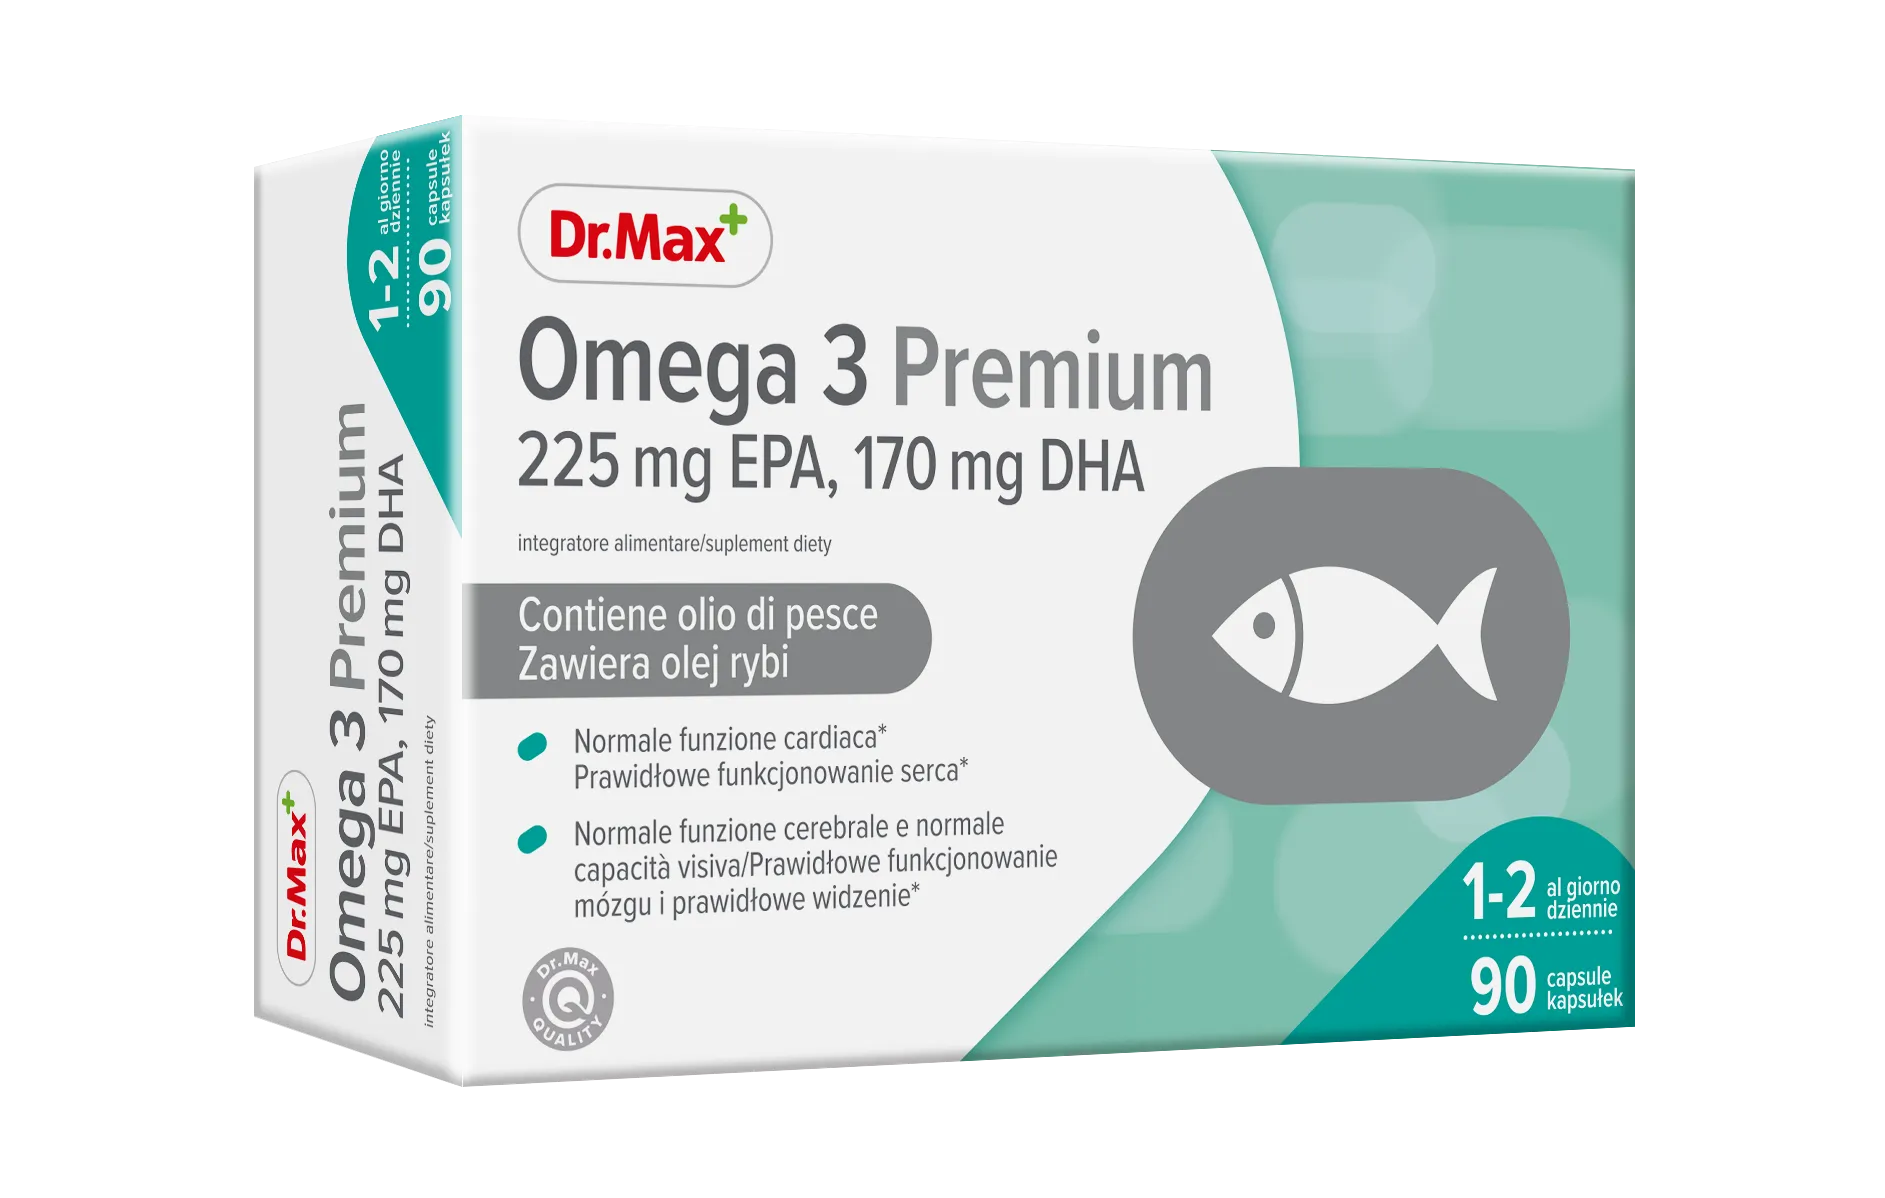 Omega 3 Premium Dr.Max suplement diety, 90 kapsułek